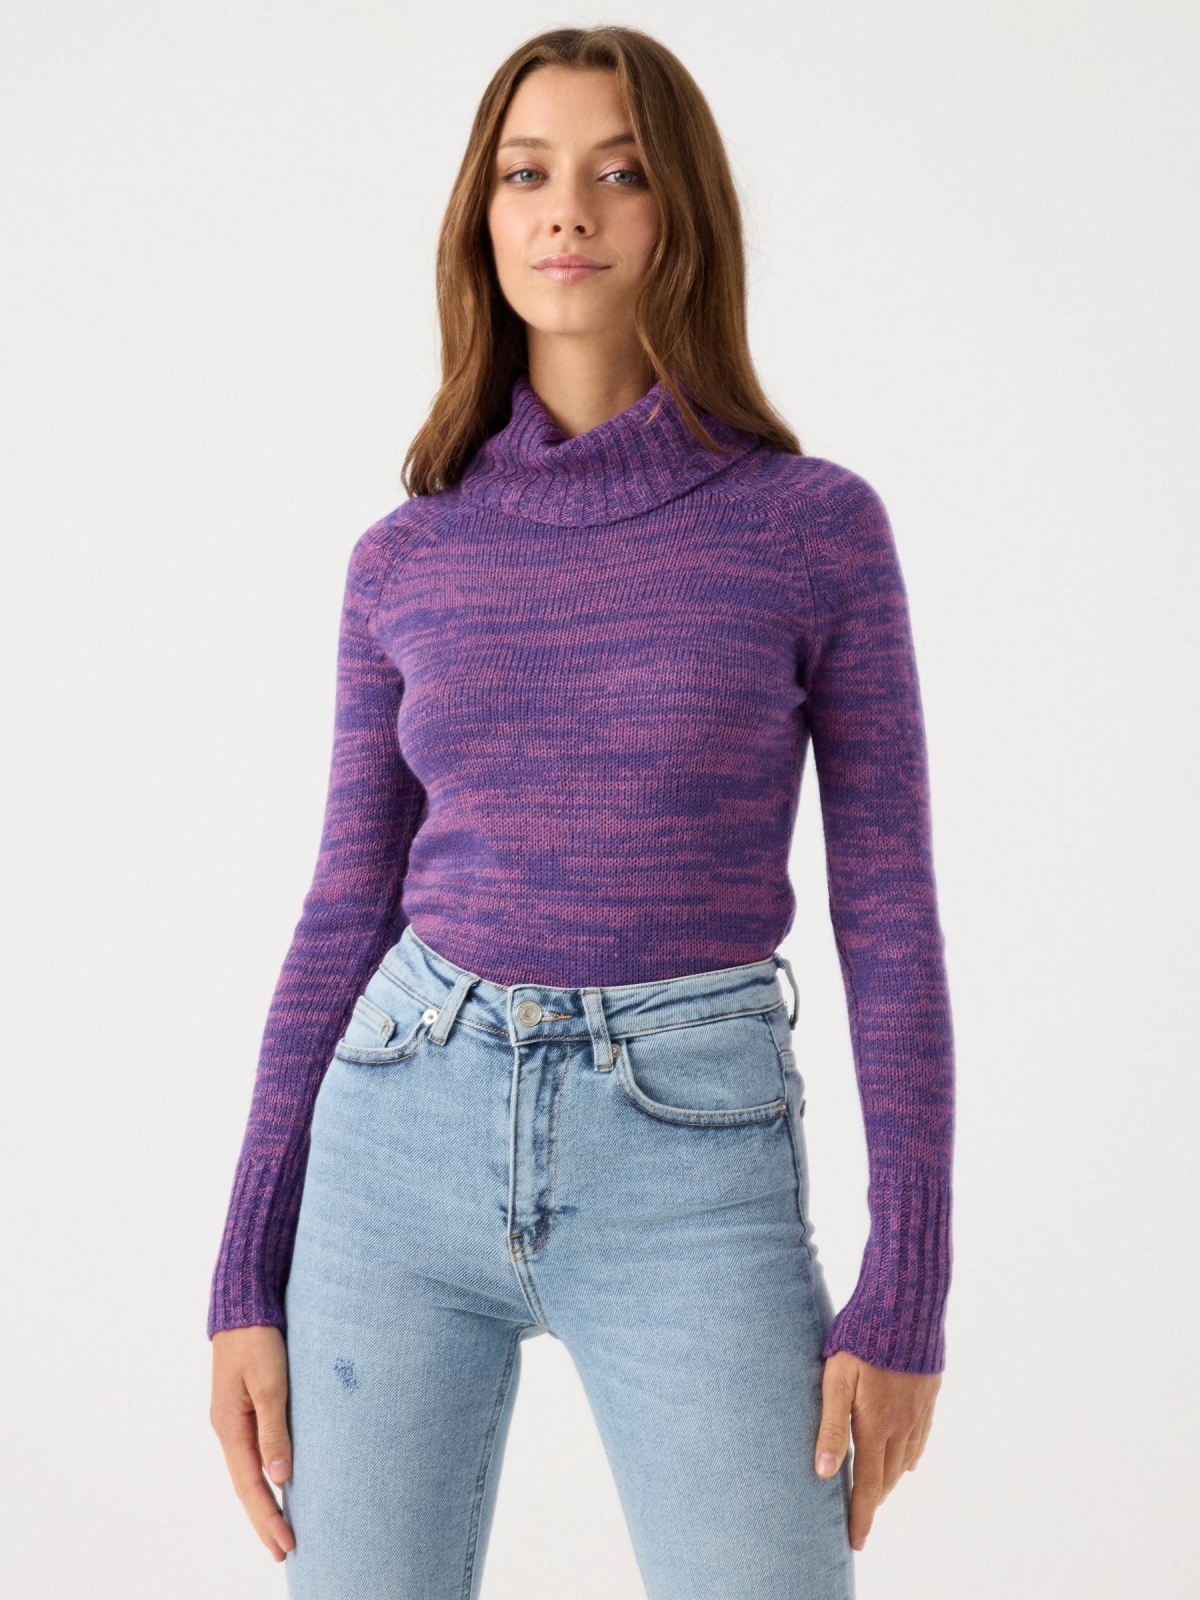 Fleece turtleneck sweater purple middle front view